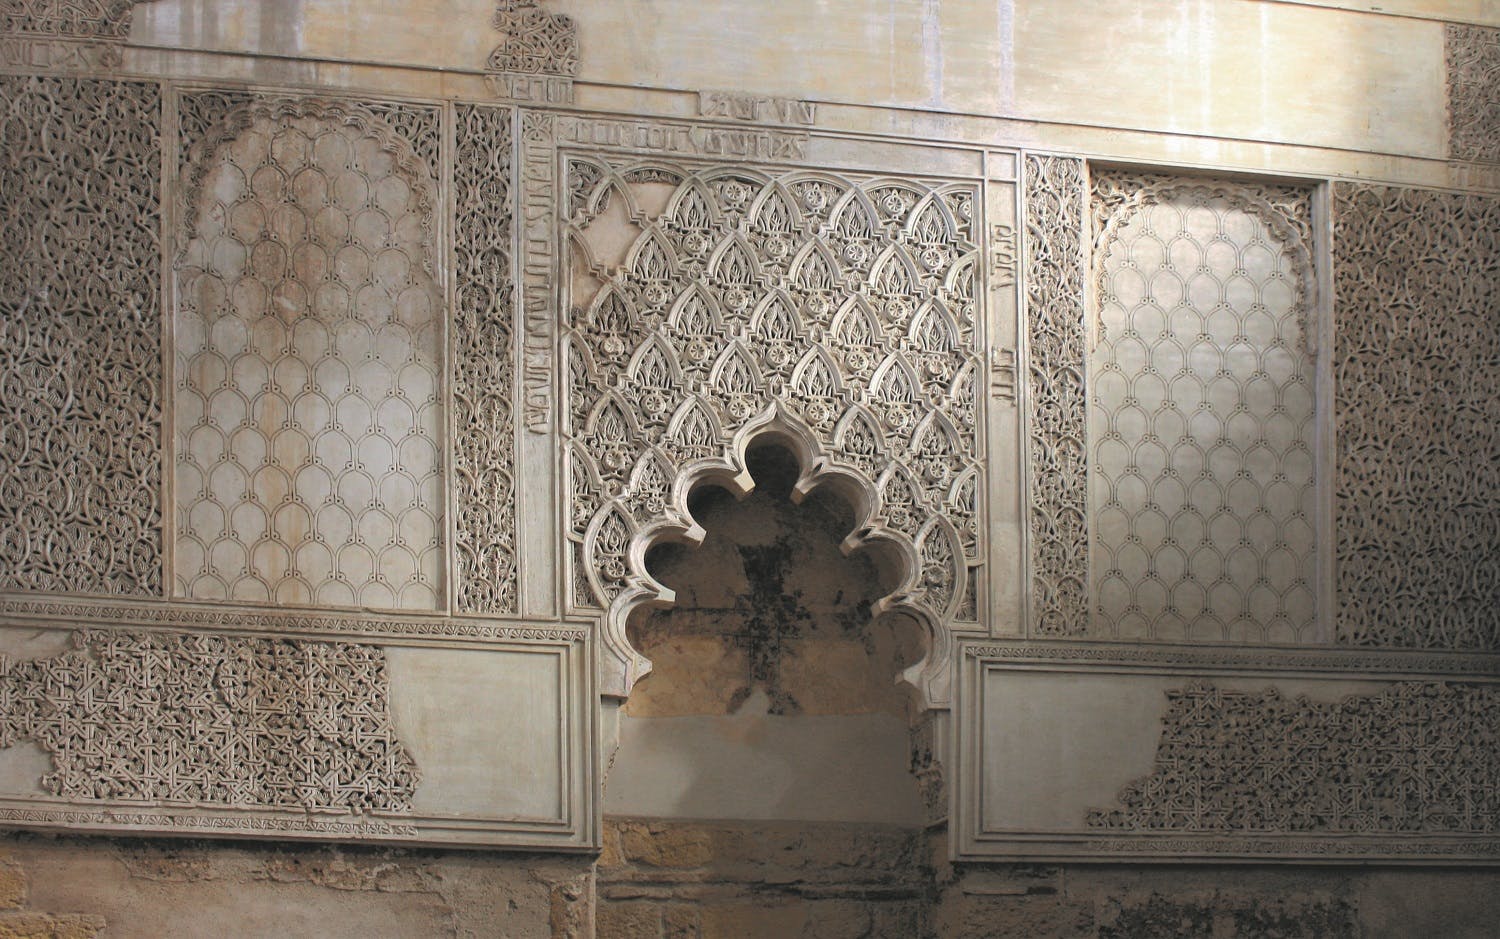 Jewish Quarter of Córdoba guided tour